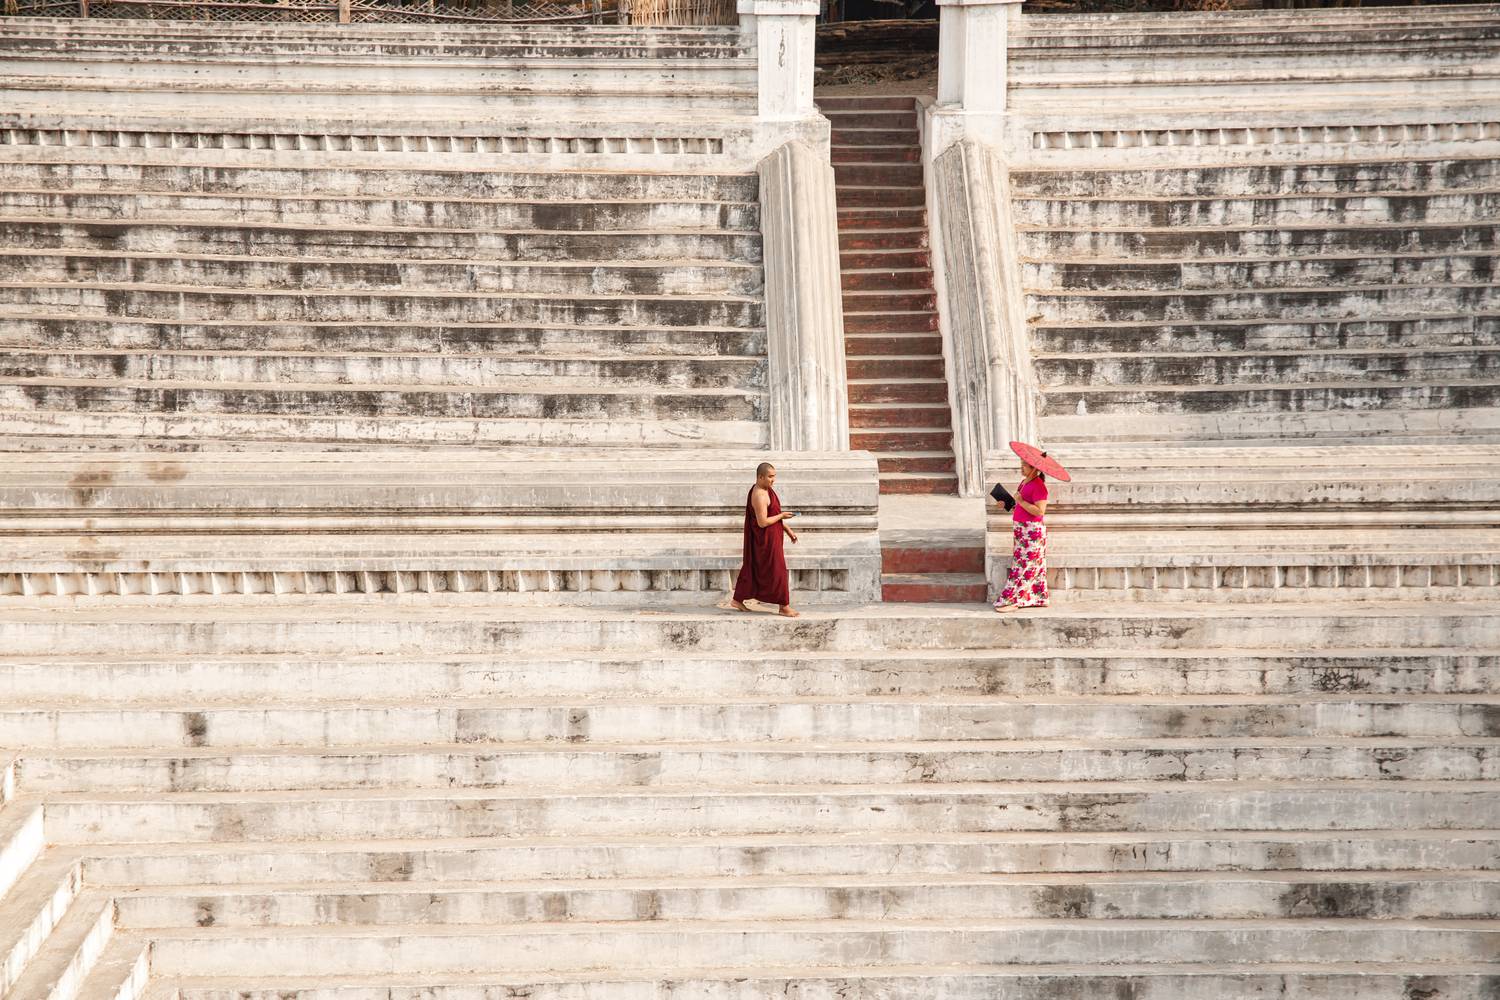 Tempel in Mandalay, Myanmar (Burma) od Miro May